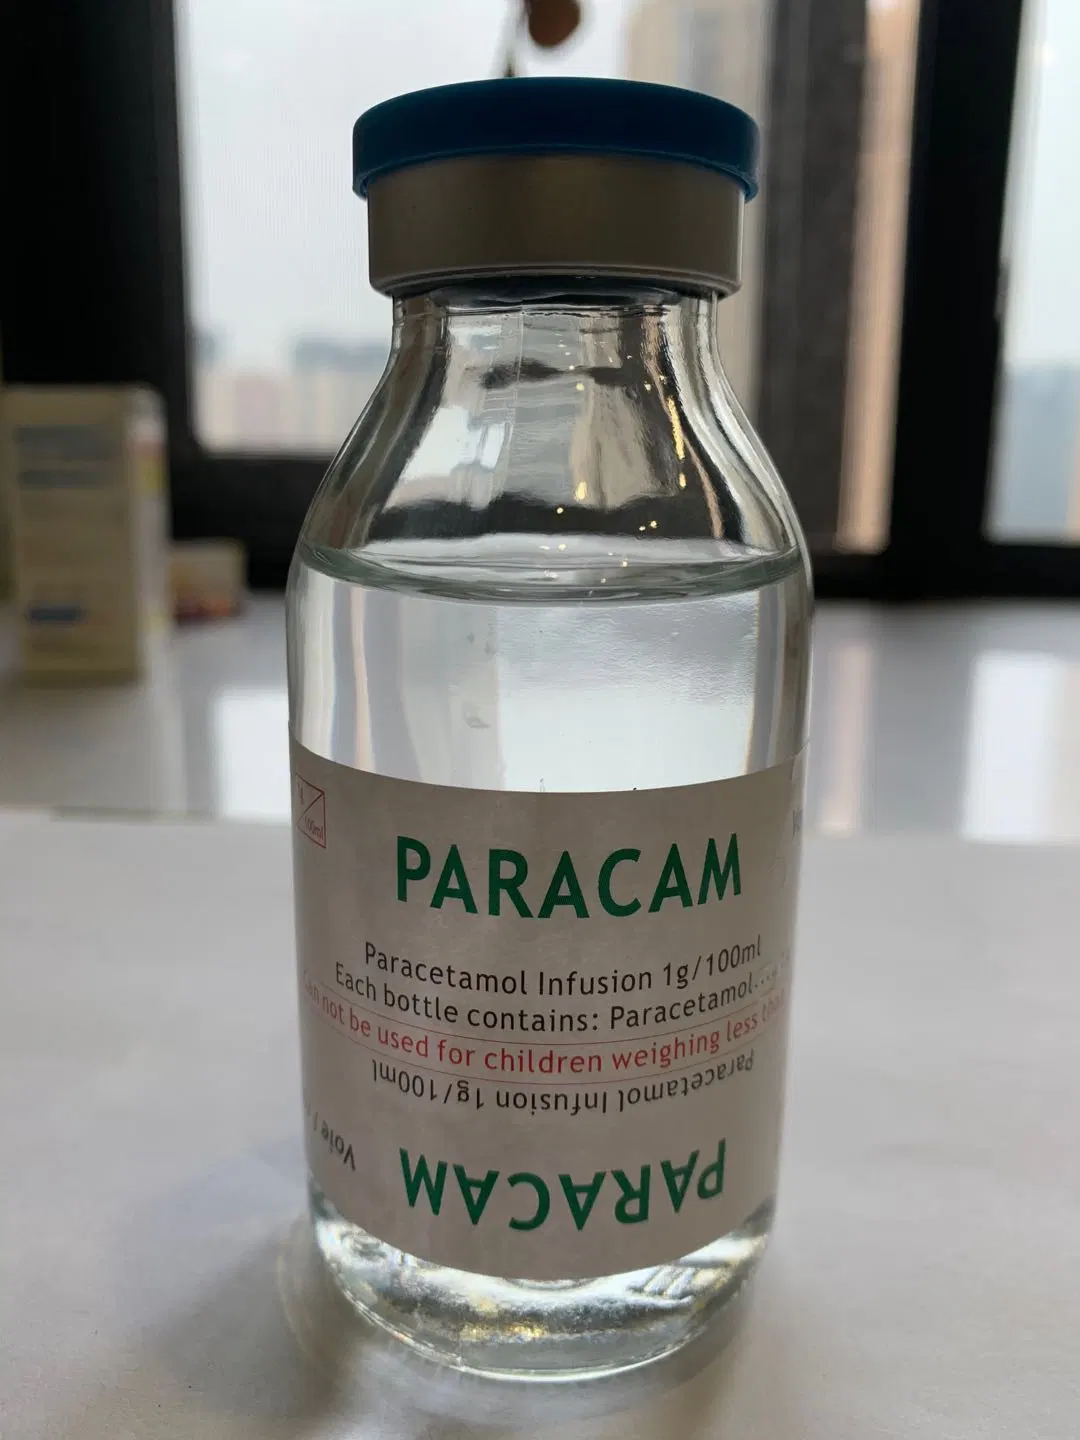 1G/100ml Paracetamol-Infusion